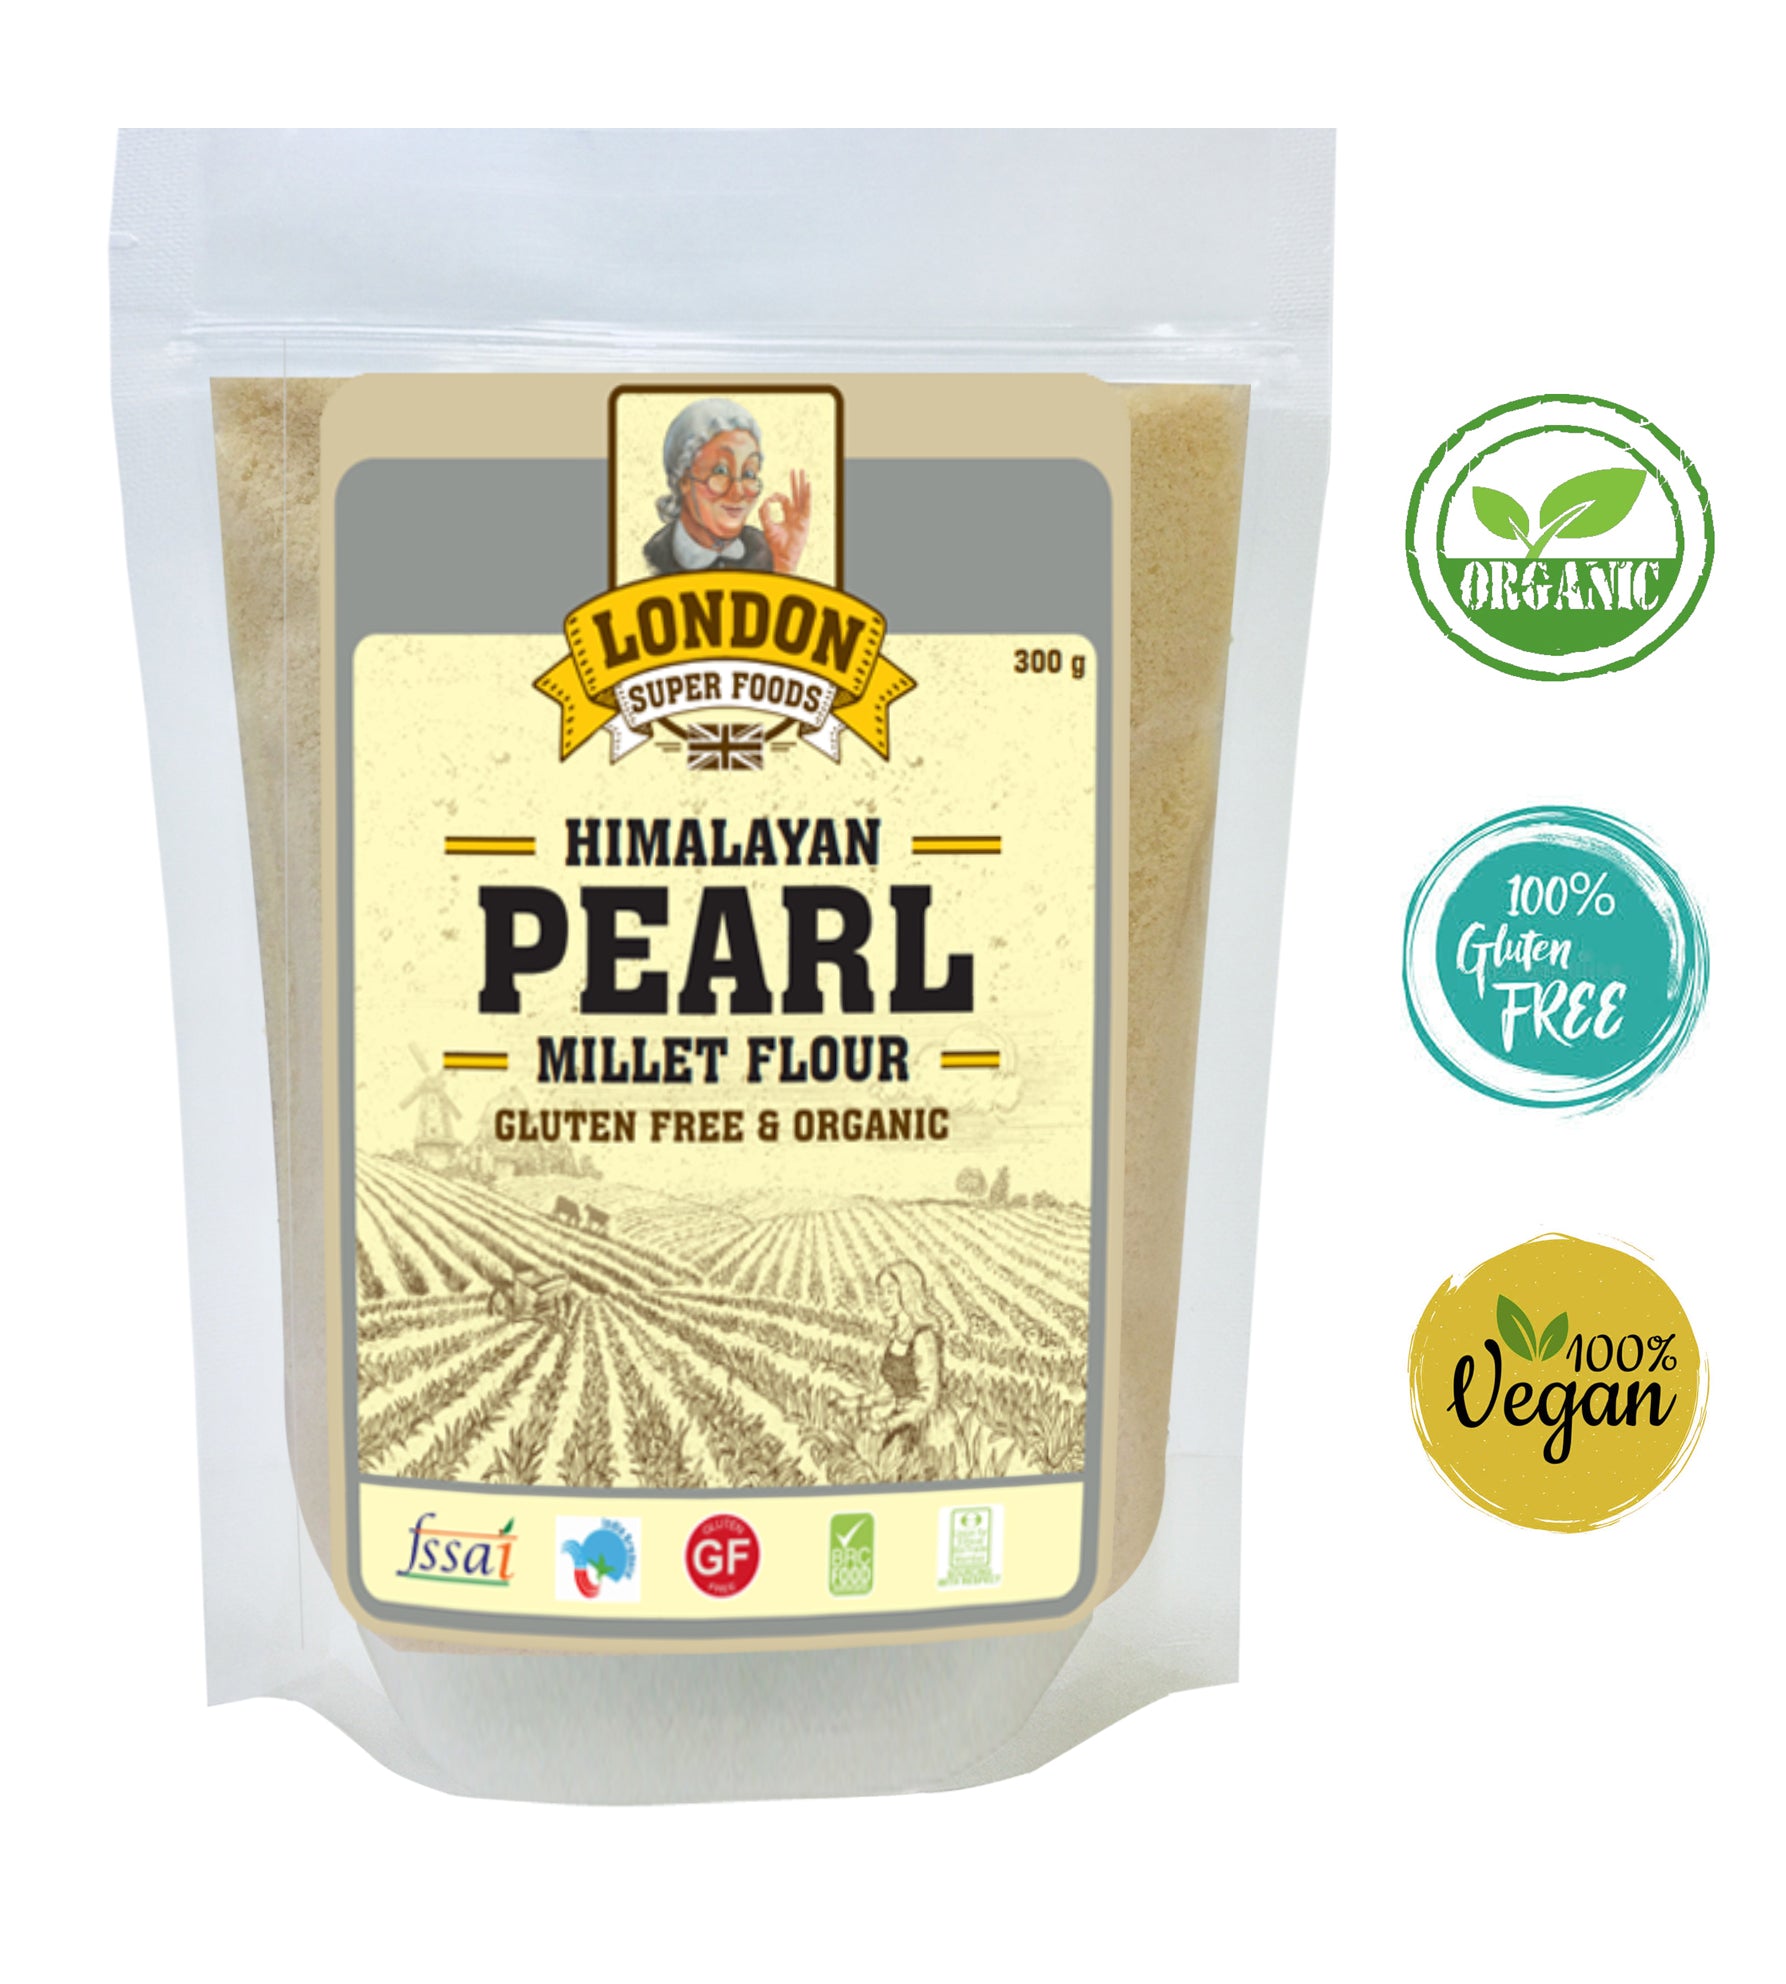 LONDON SUPER FOODS Himalayan Organic Pearl Millet Flour, 300g - Gluten Free